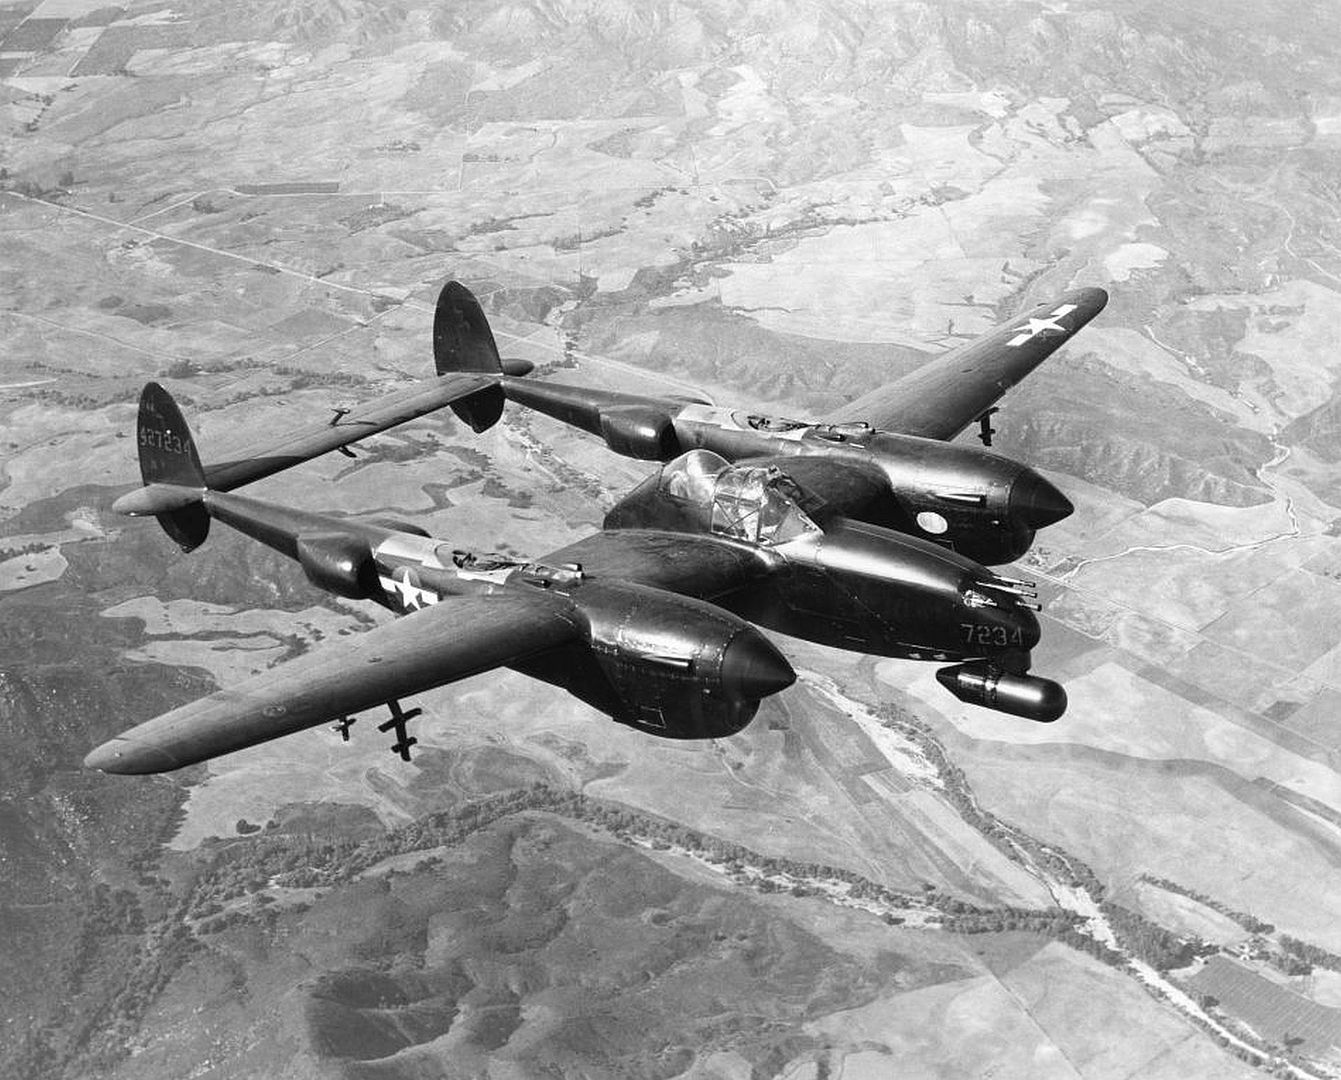 П 38 история 5. P-38 Lightning. Локхид п 38 Лайтнинг. Р-38j"Лайтнинг". P-38m Night Lightning.